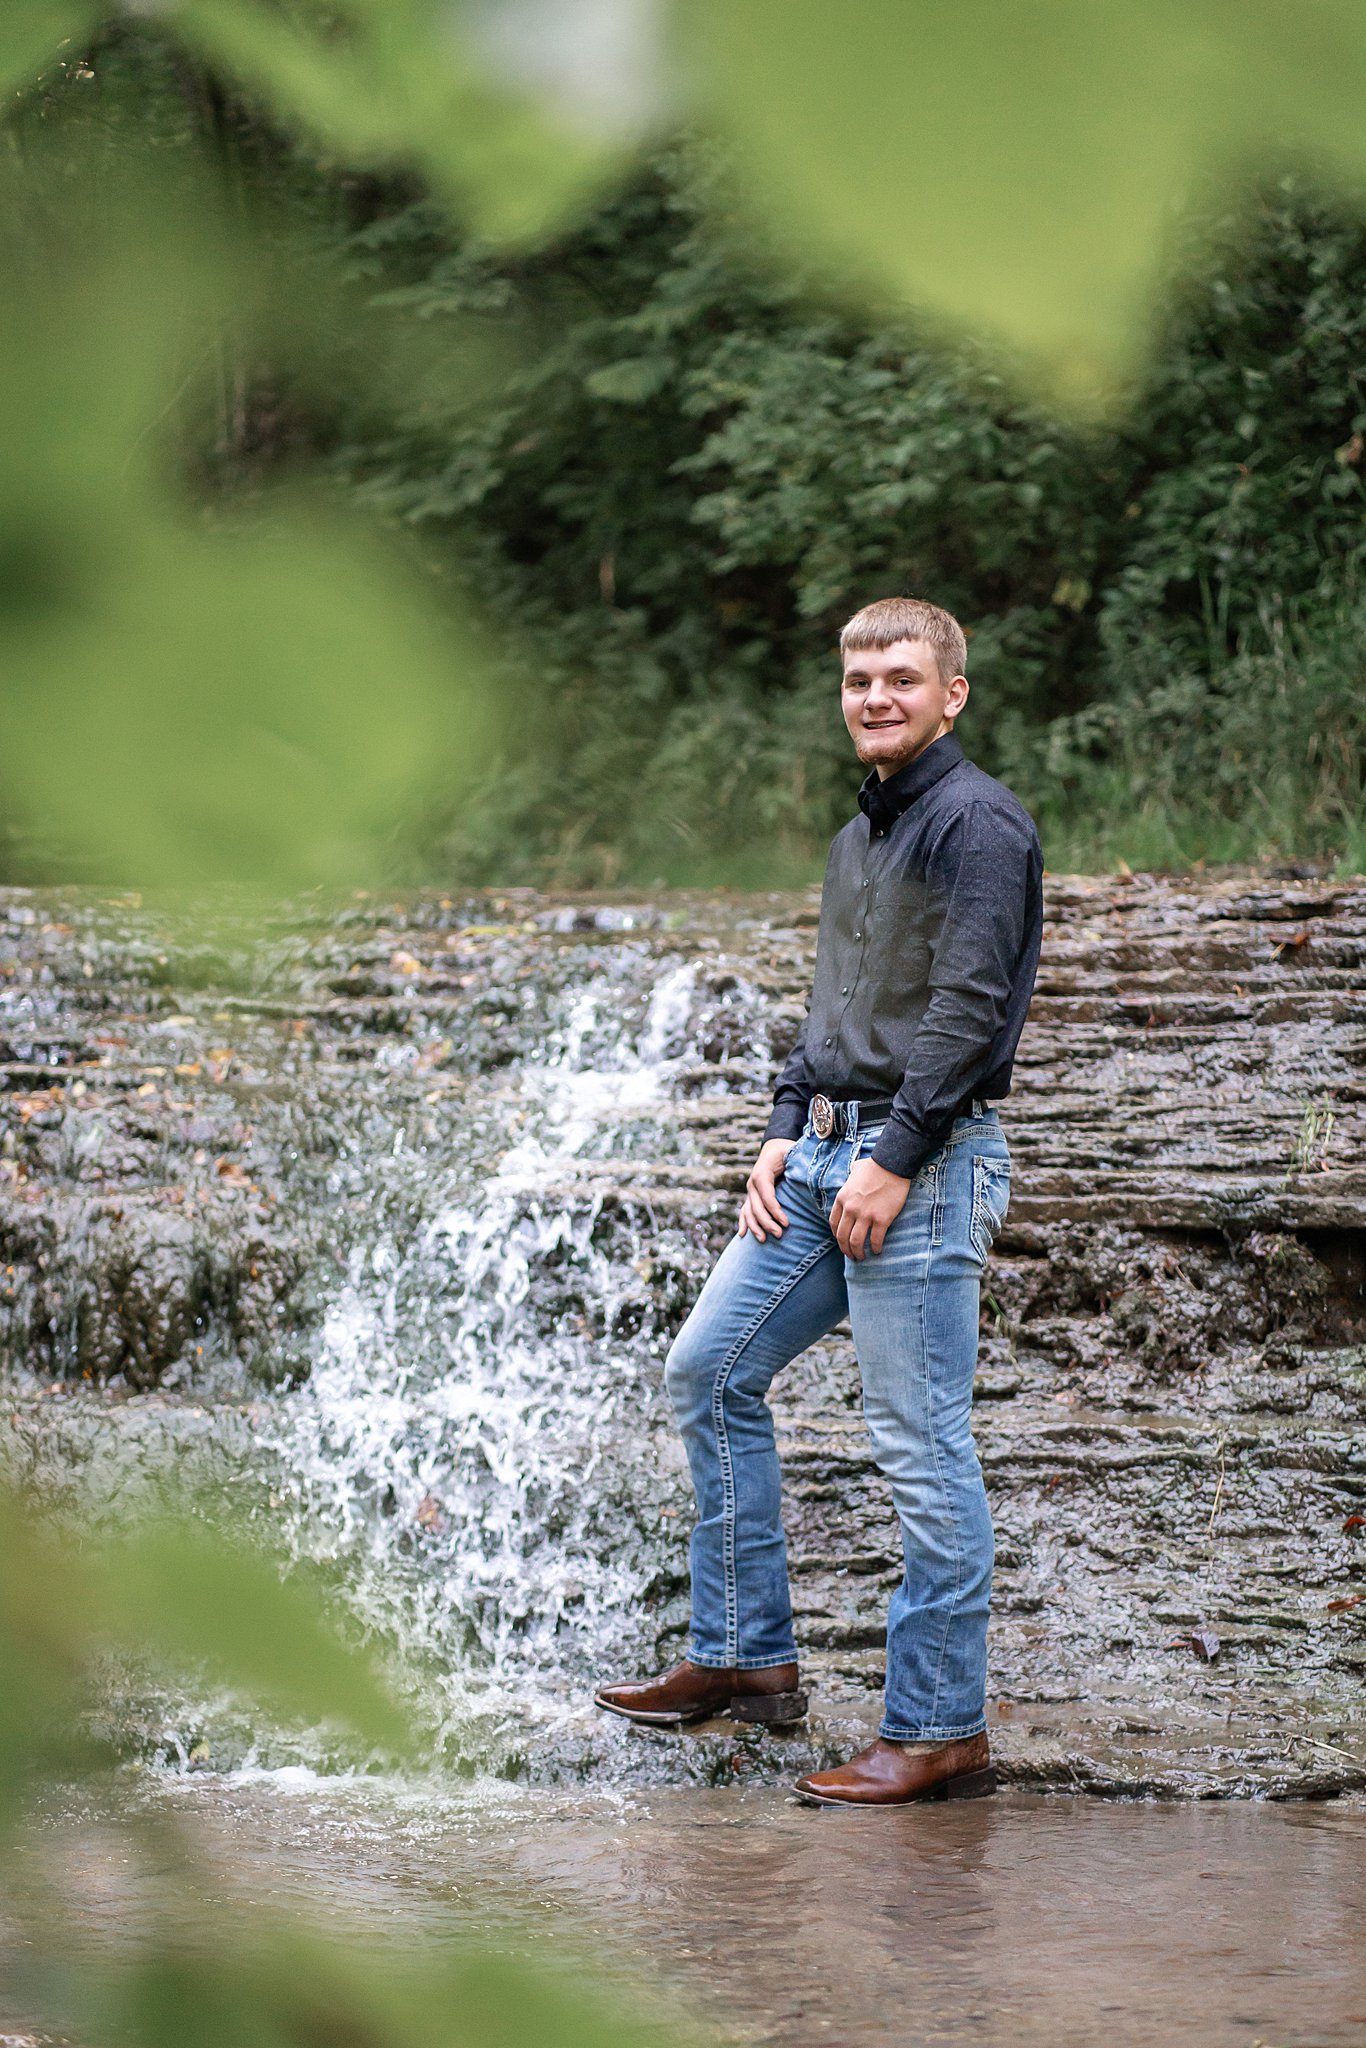 Rushford Peterson High School Senior in grey sweatshirt and jeans standing in the stream